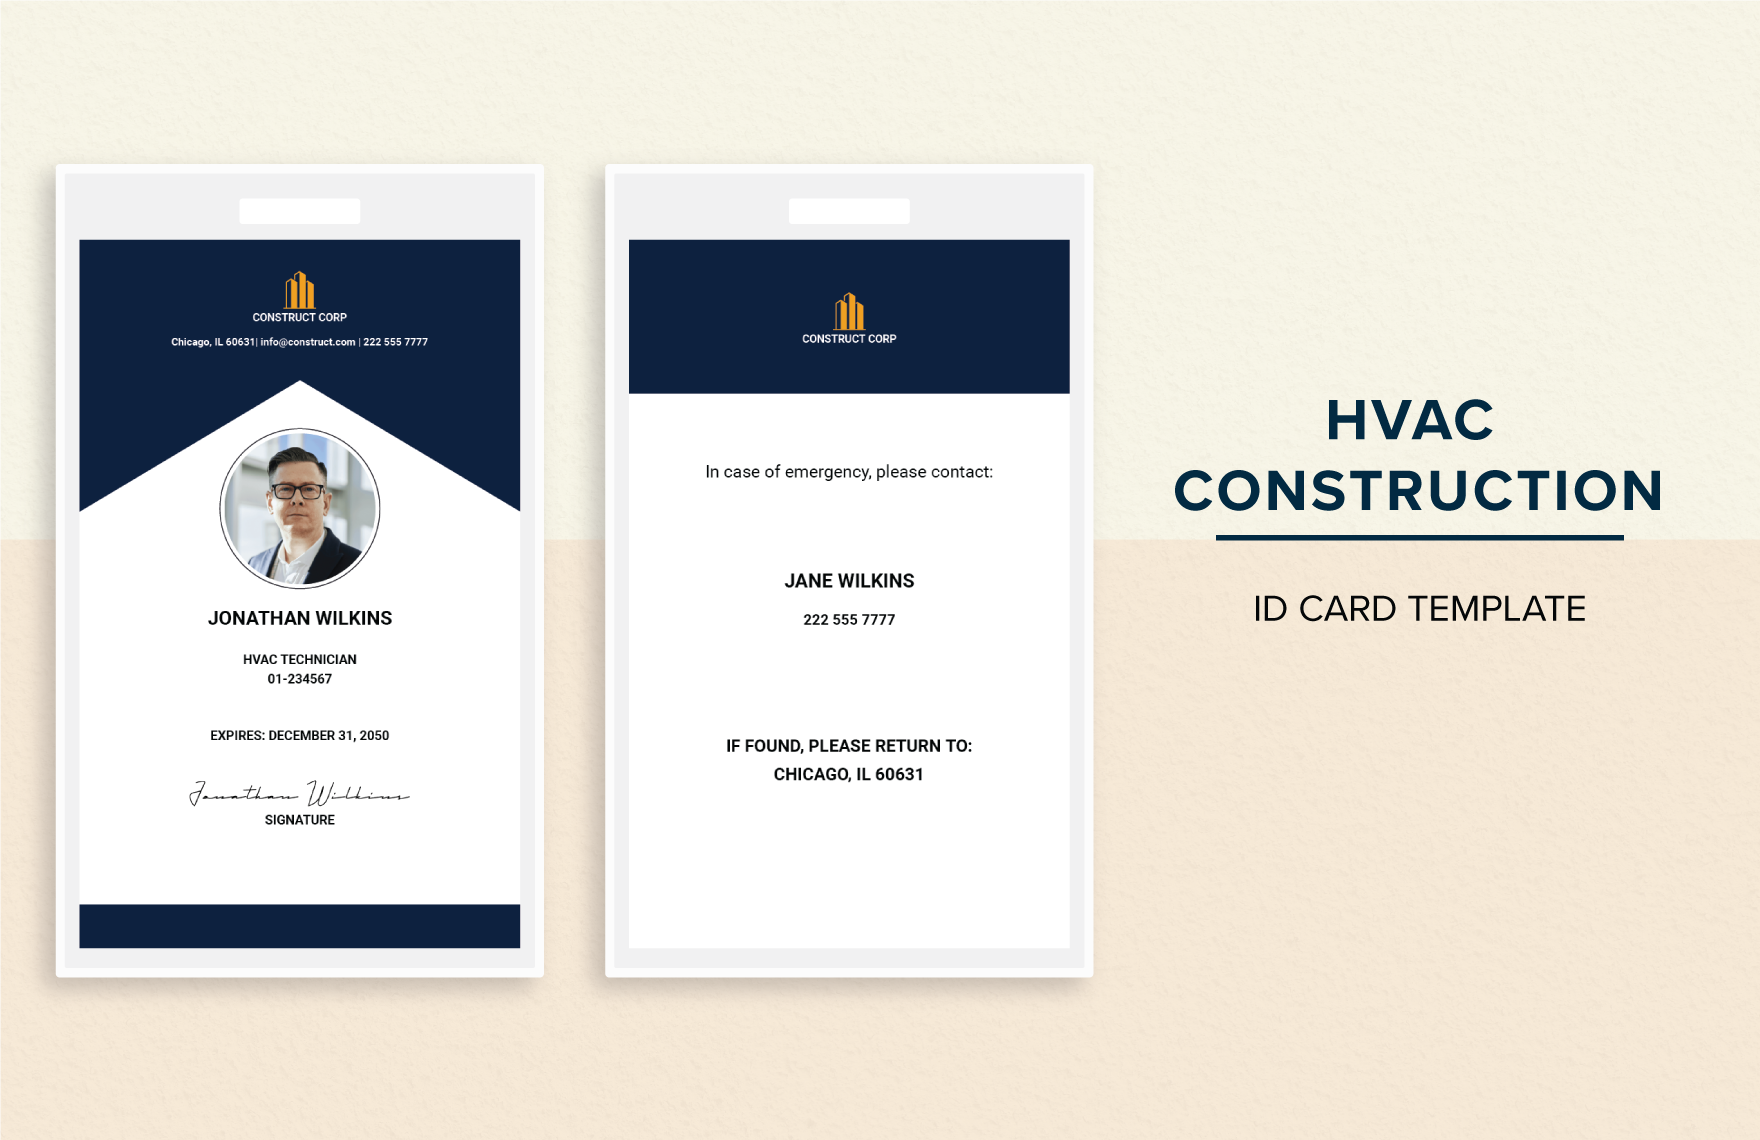 HVAC Construction ID Card Template